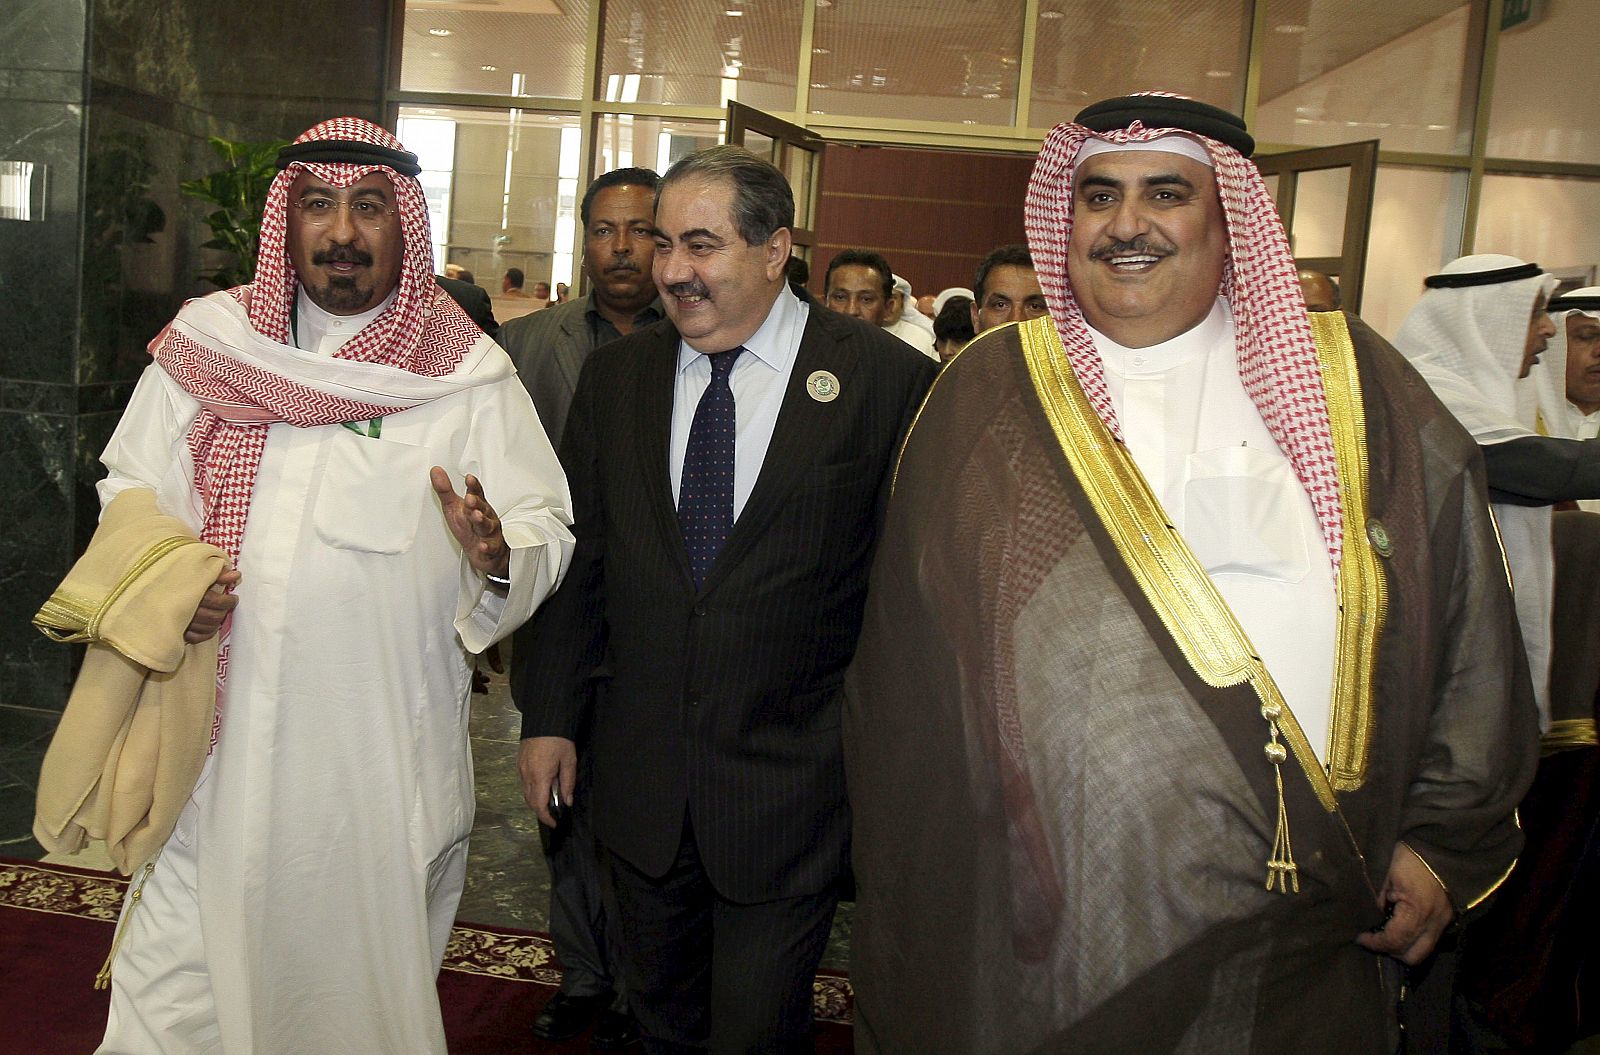 El ministro de Exteriores iraquí, Hosyar Zebari y sus homólogos de Kuwait, Sheikh Mohammed al-Sabah y Sheikh Khaled bin Ahmed al-Khalifa, de Barein, al término de una reunión de ministros de Exteriores árabes en Sirte, Libia.